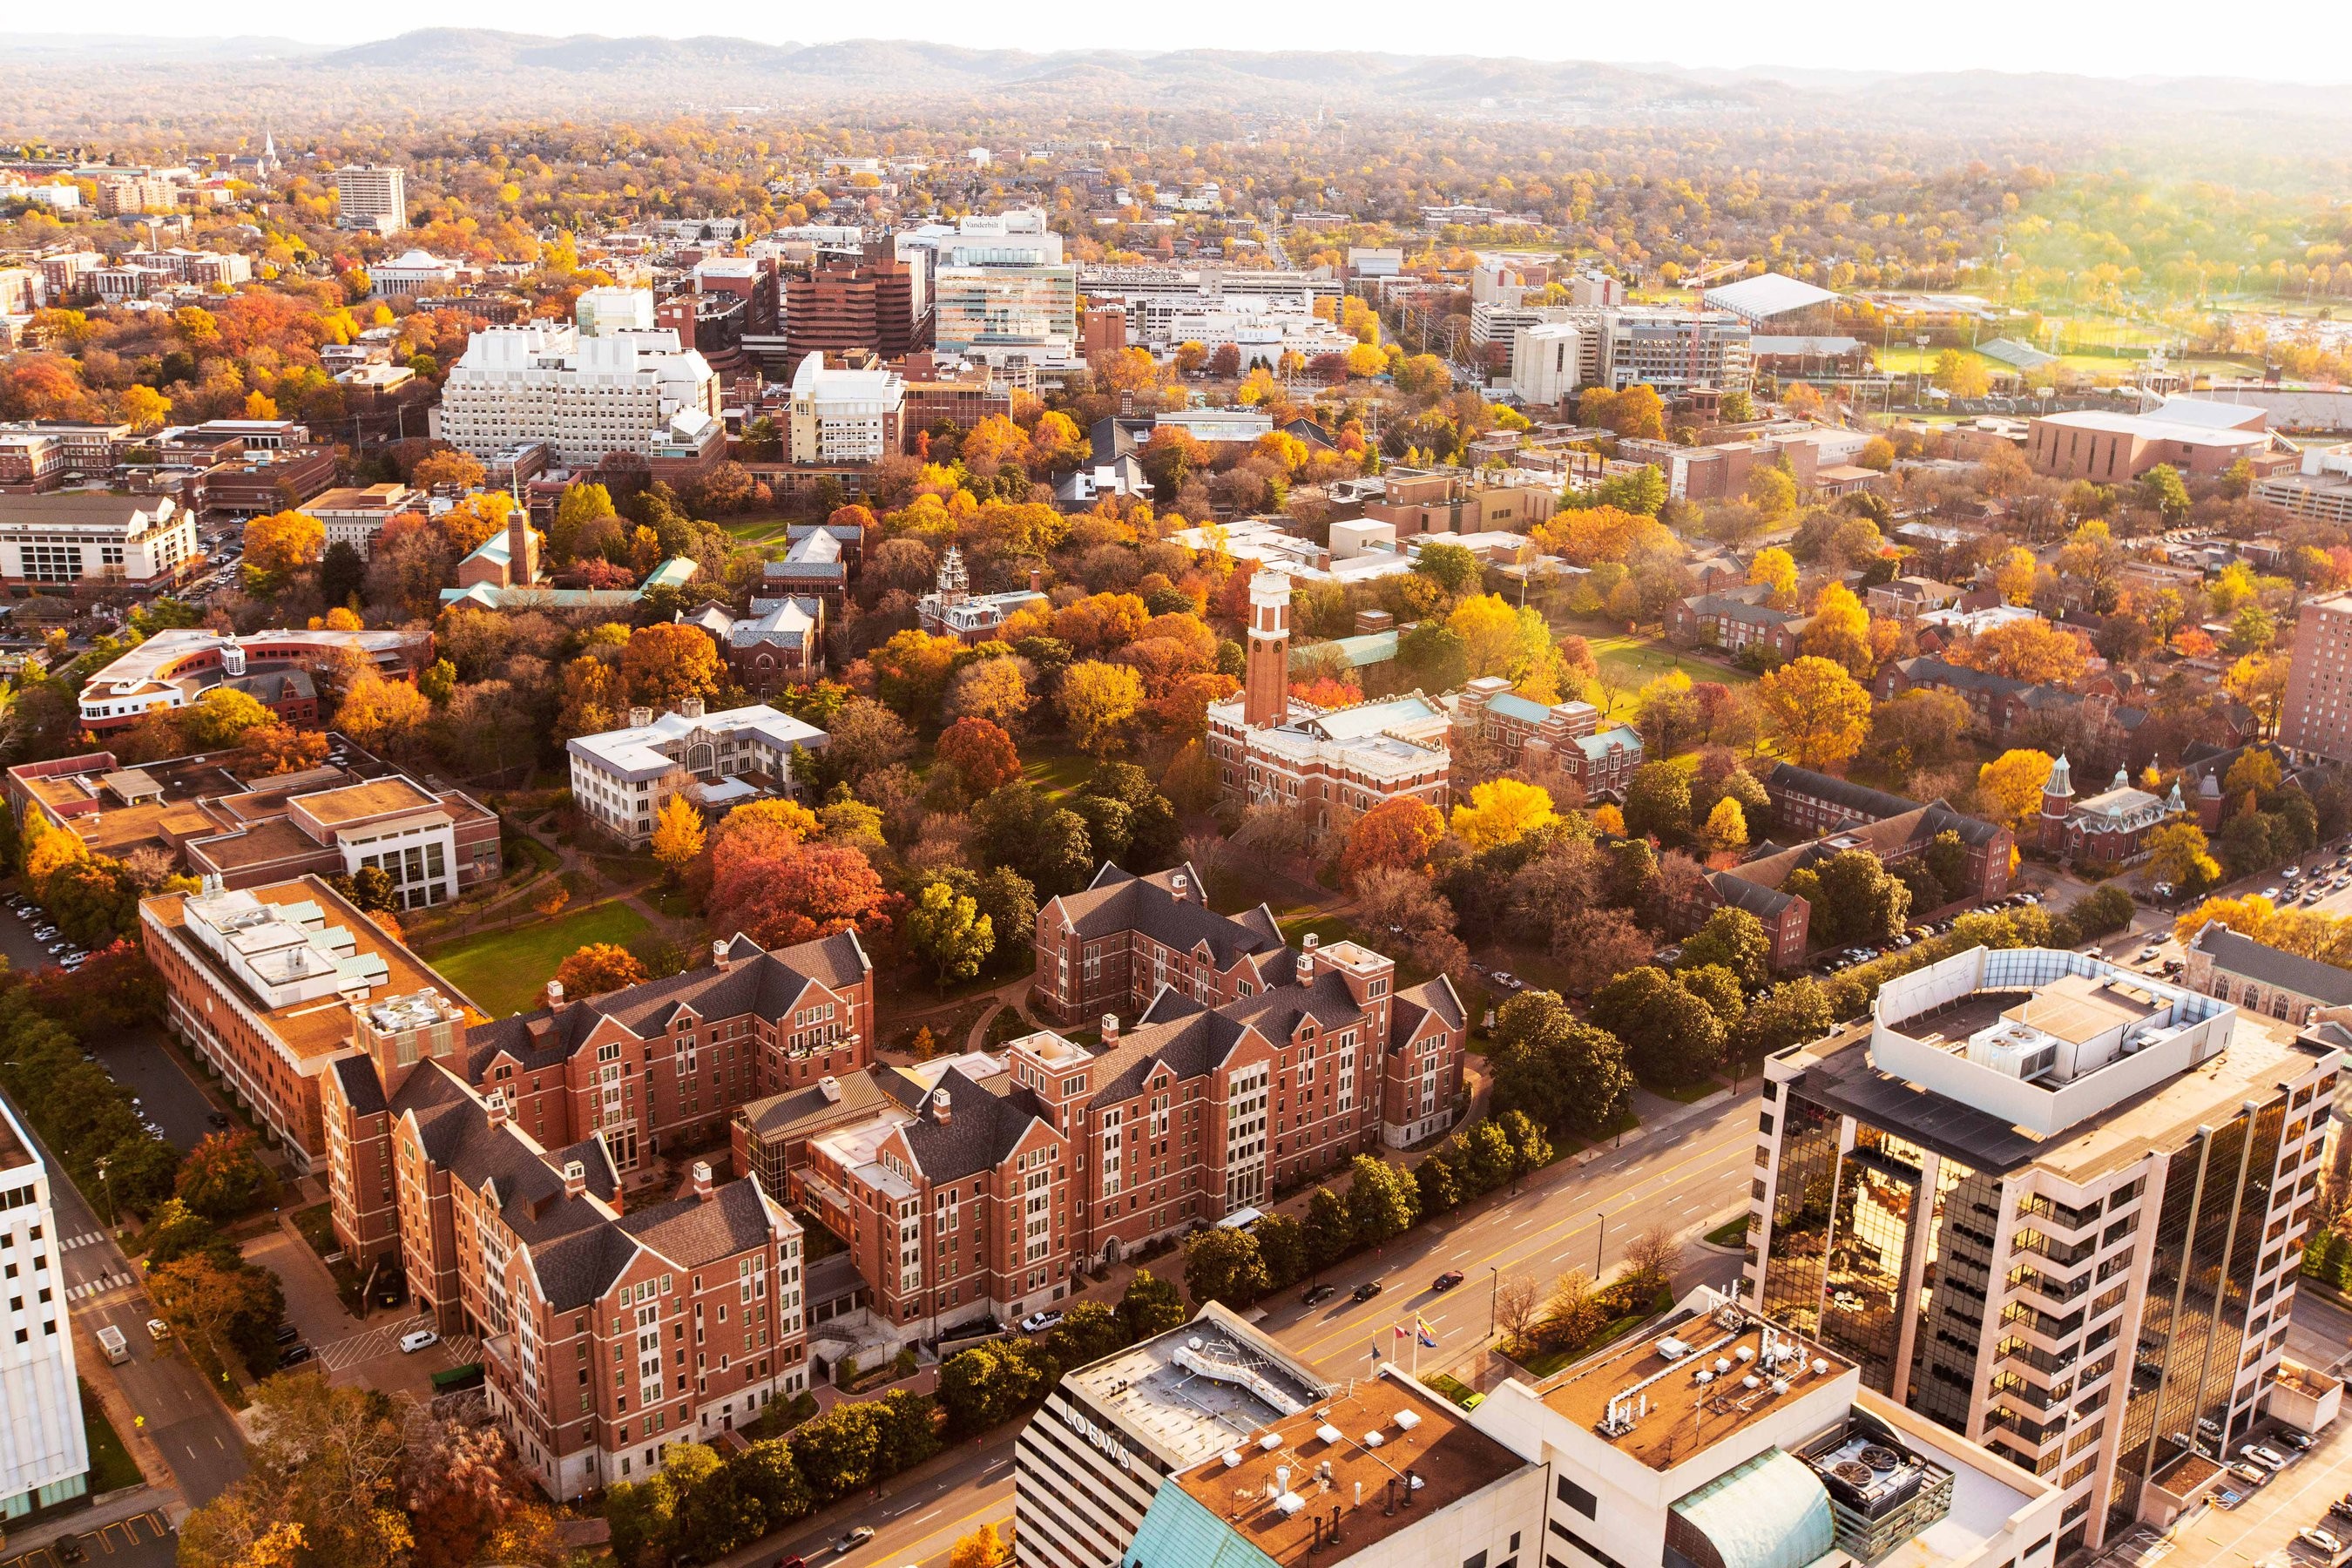 Aerial view of Vanderbilt campus buildings showing leaves turning autumn colors